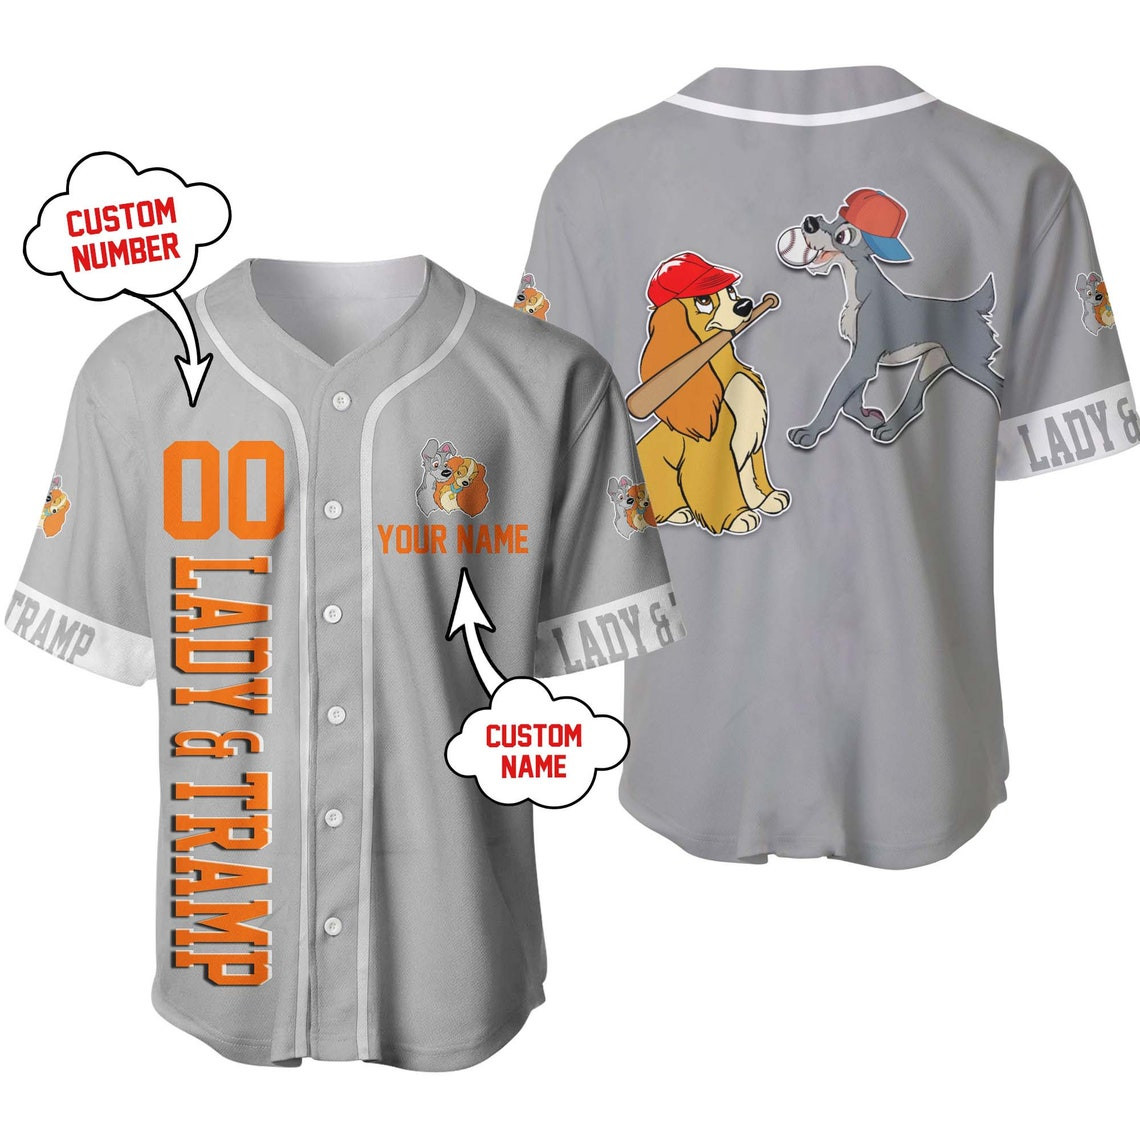 Lady The Tramp Gray Disney Unisex Cartoon Custom Baseball Jersey Personalized Shirt Men Women